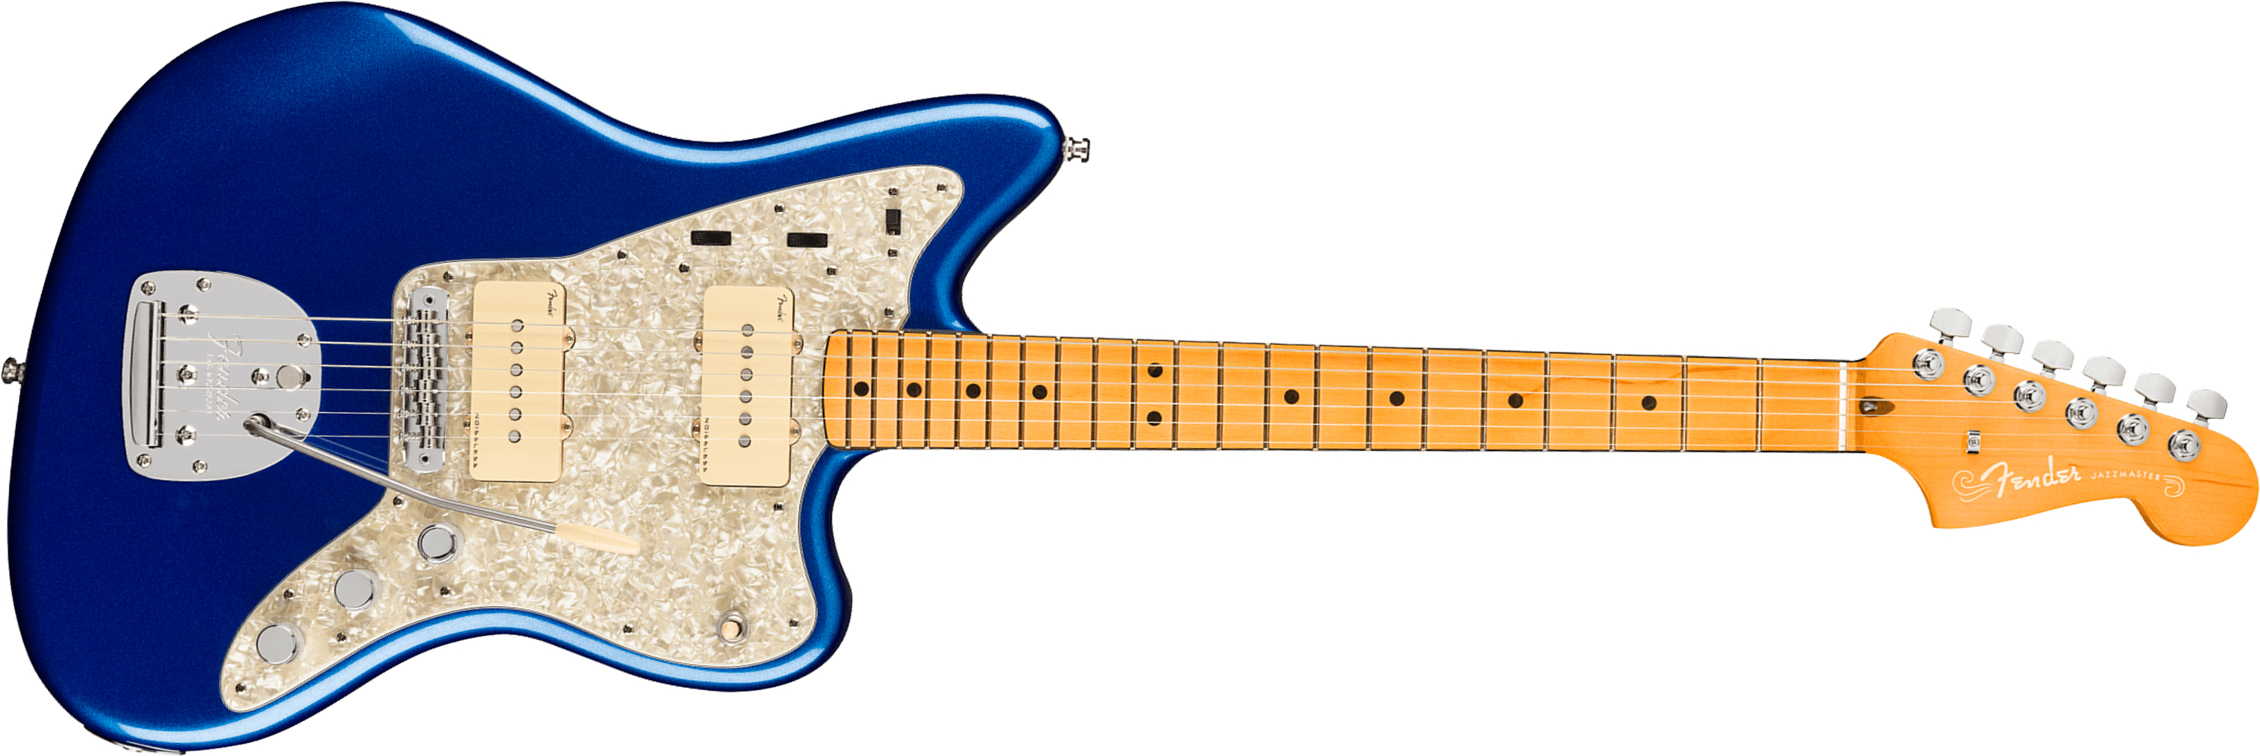 Fender Jazzmaster American Ultra 2019 Usa Mn - Cobra Blue - Retro-rock elektrische gitaar - Main picture